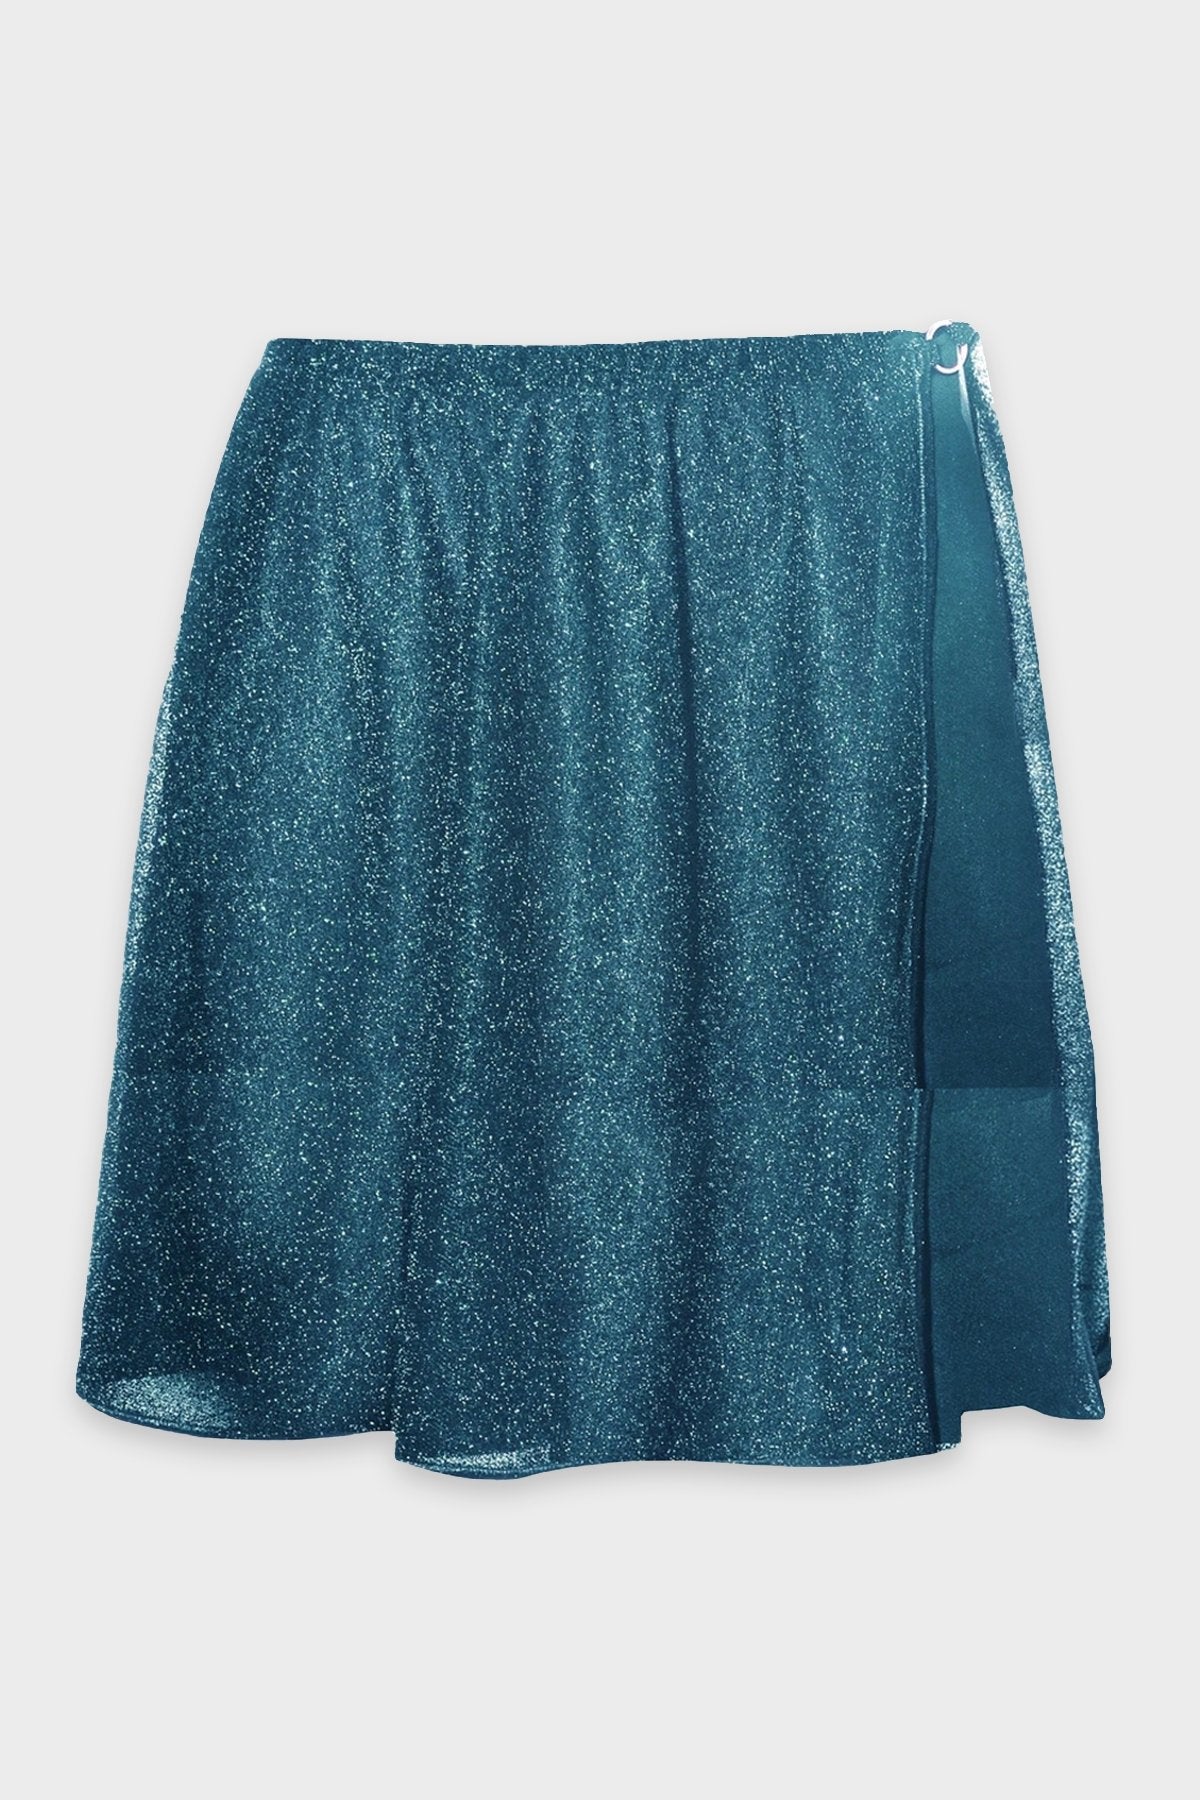 Lumière Ring Skirt in Ocean Blue - shop-olivia.com